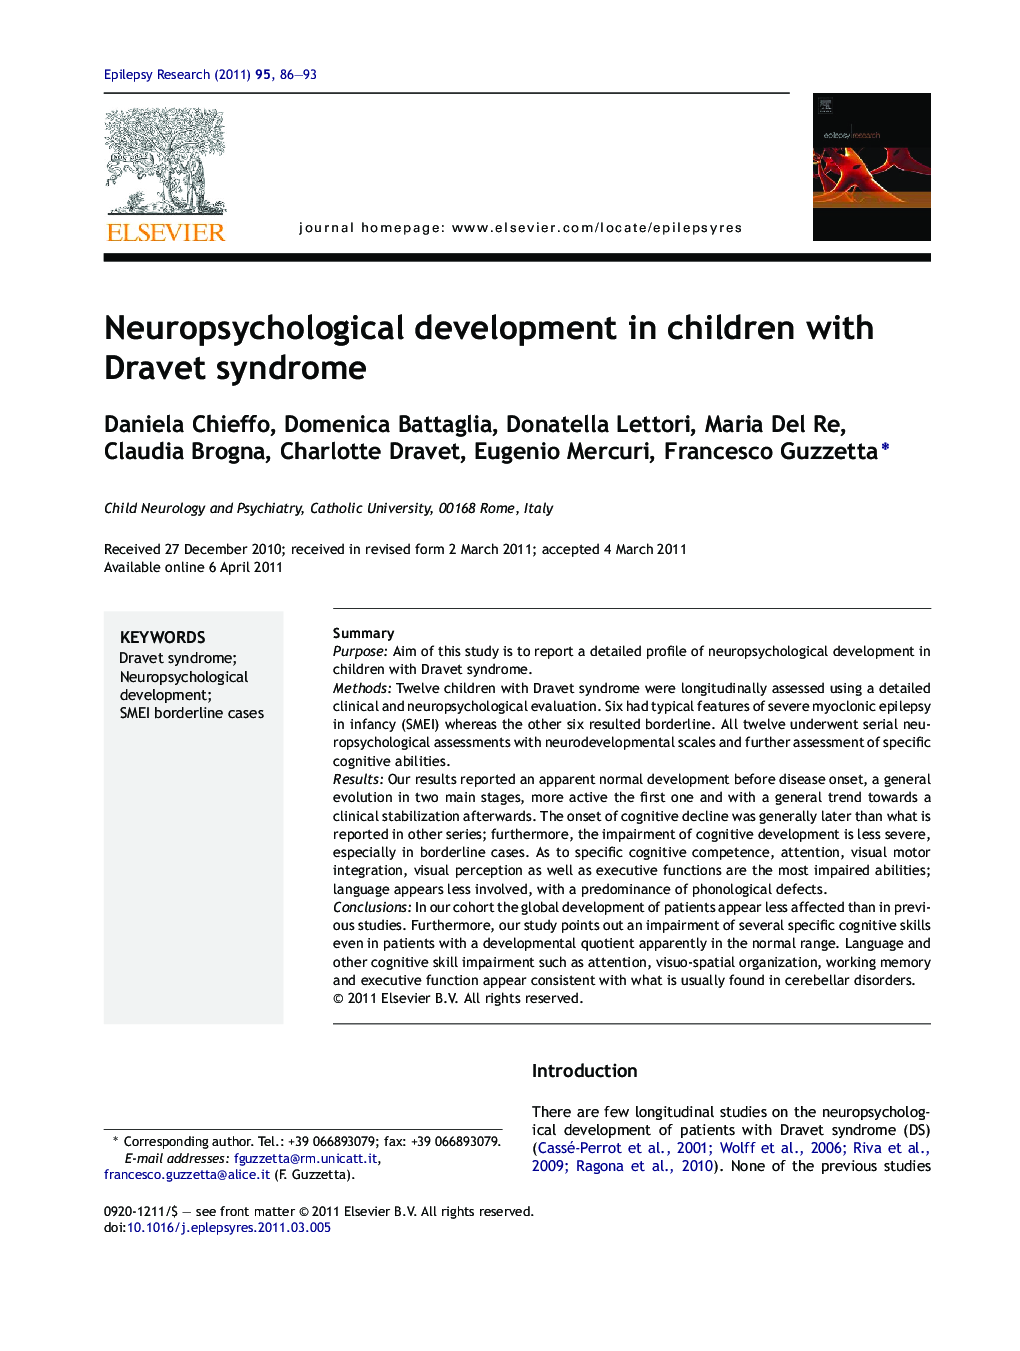 Neuropsychological development in children with Dravet syndrome